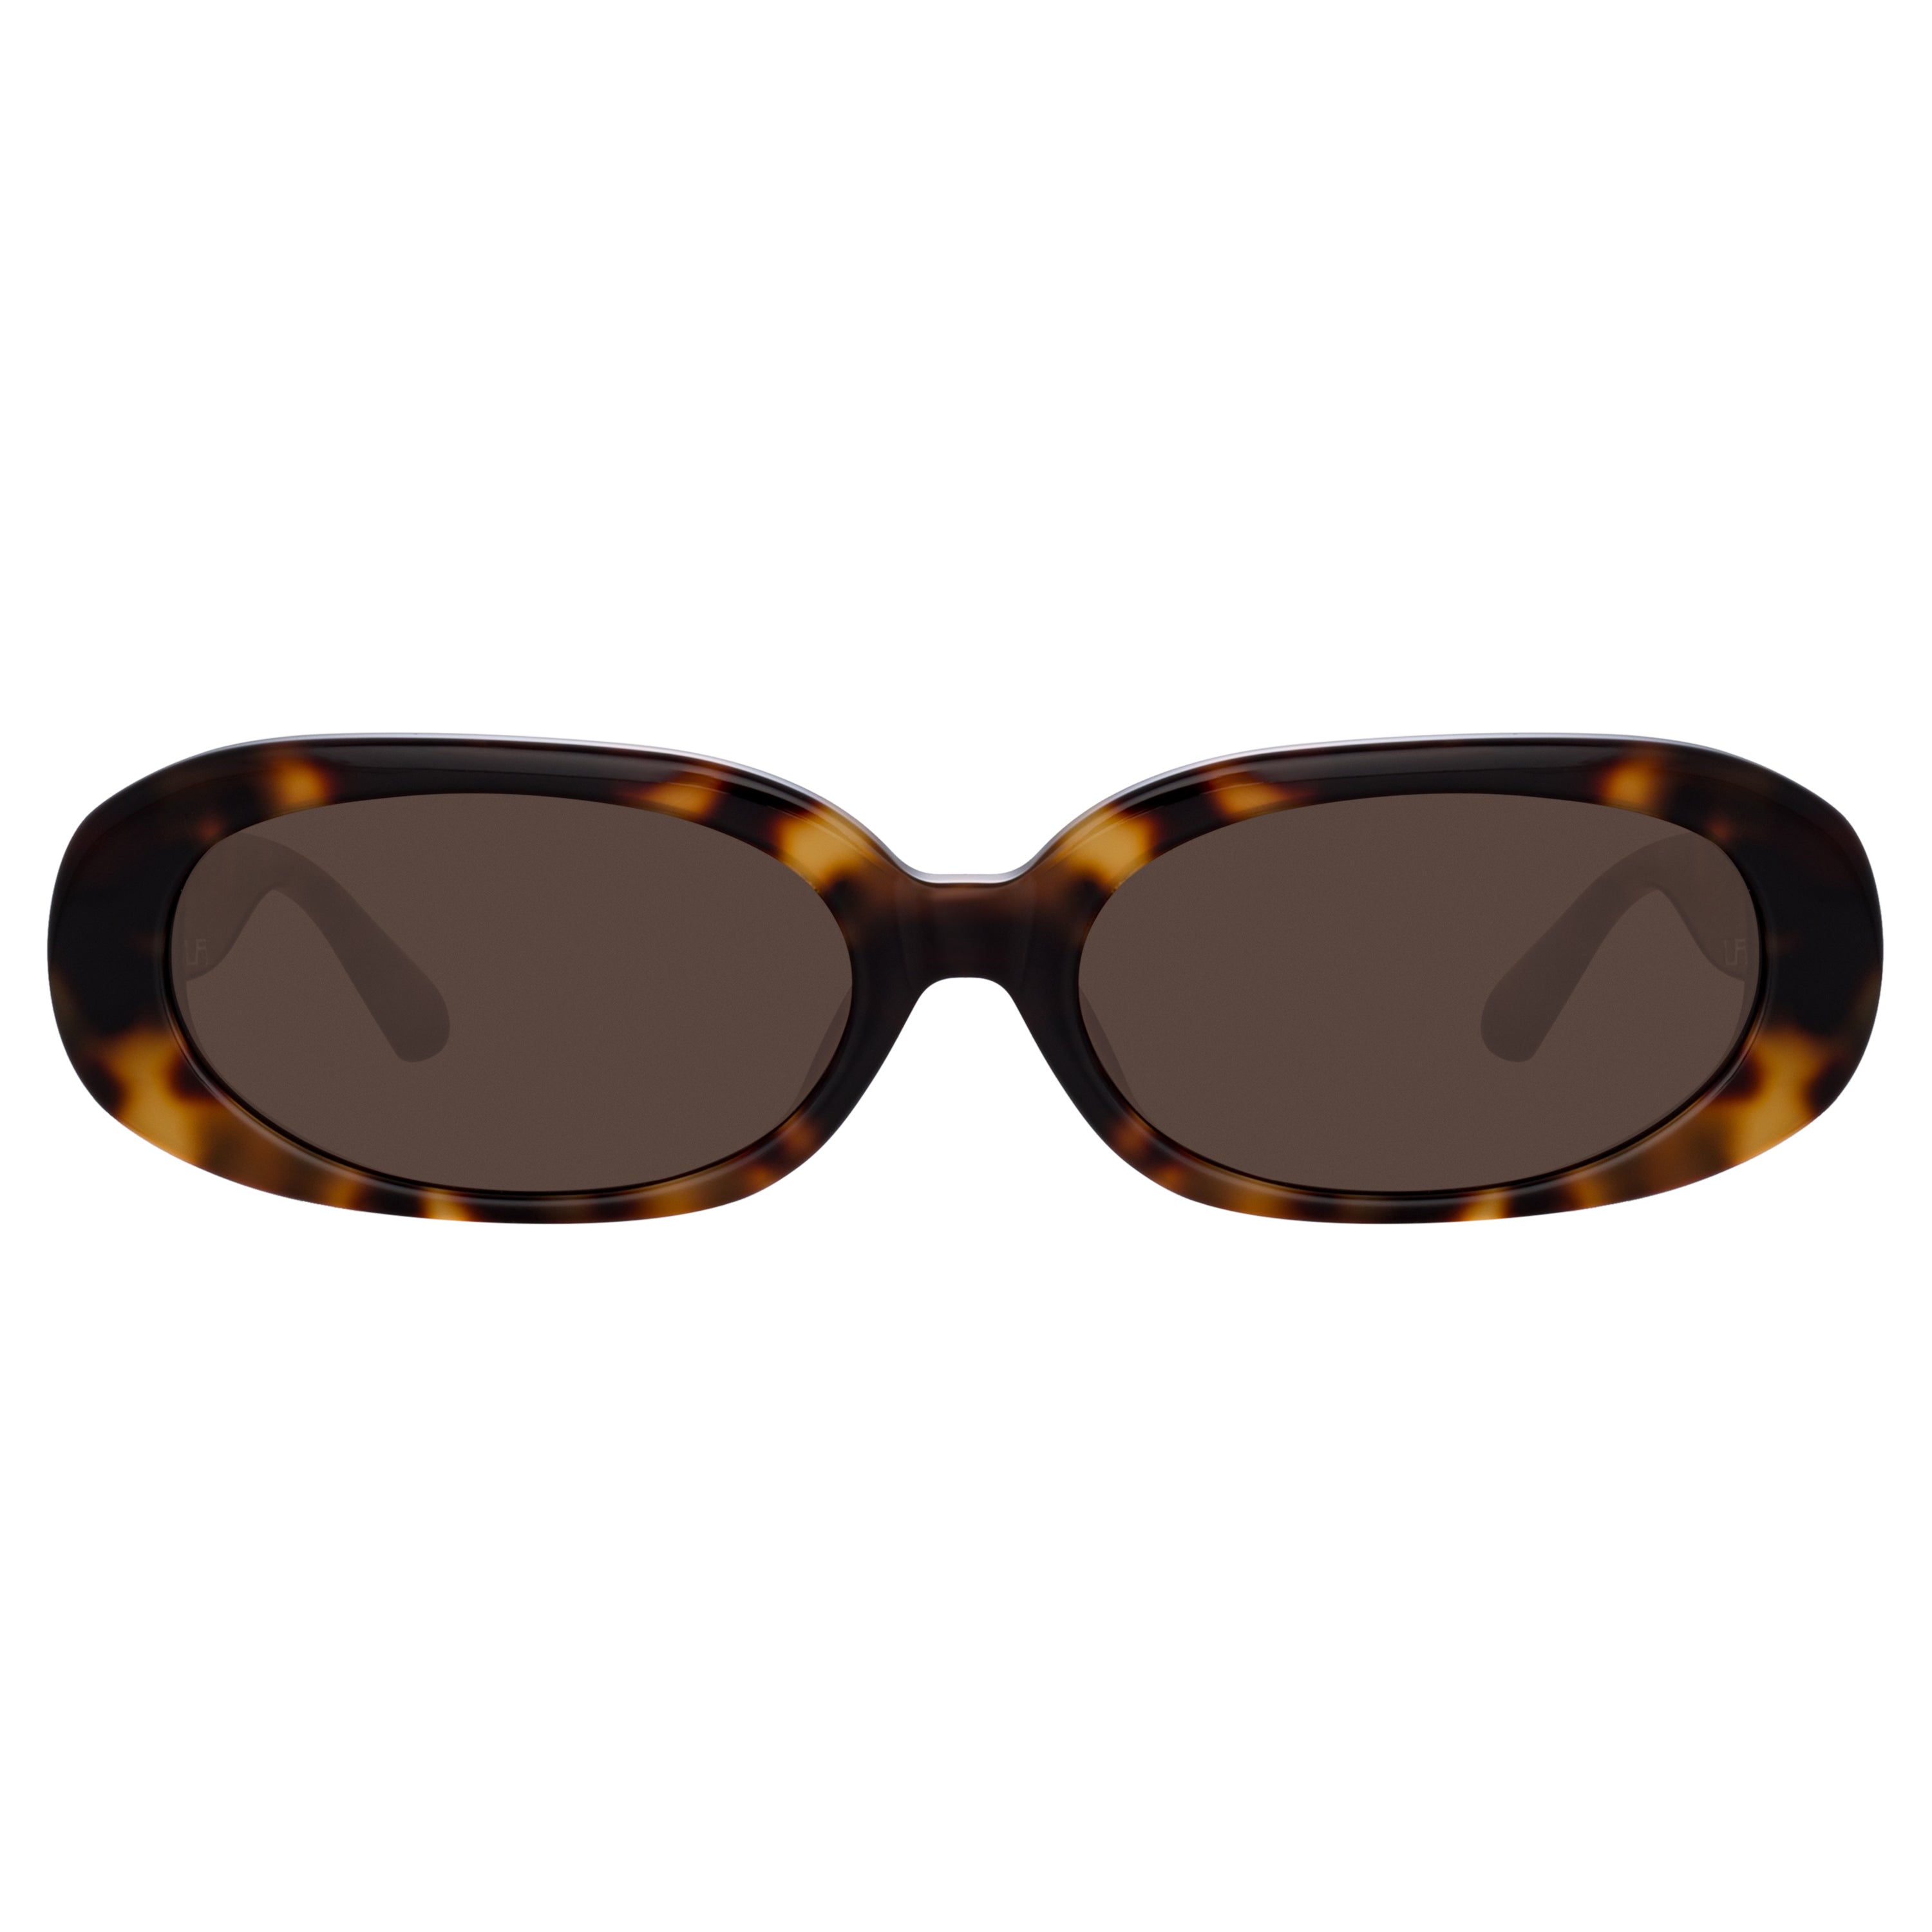 Cara Oval Sunglasses in Tortoiseshell